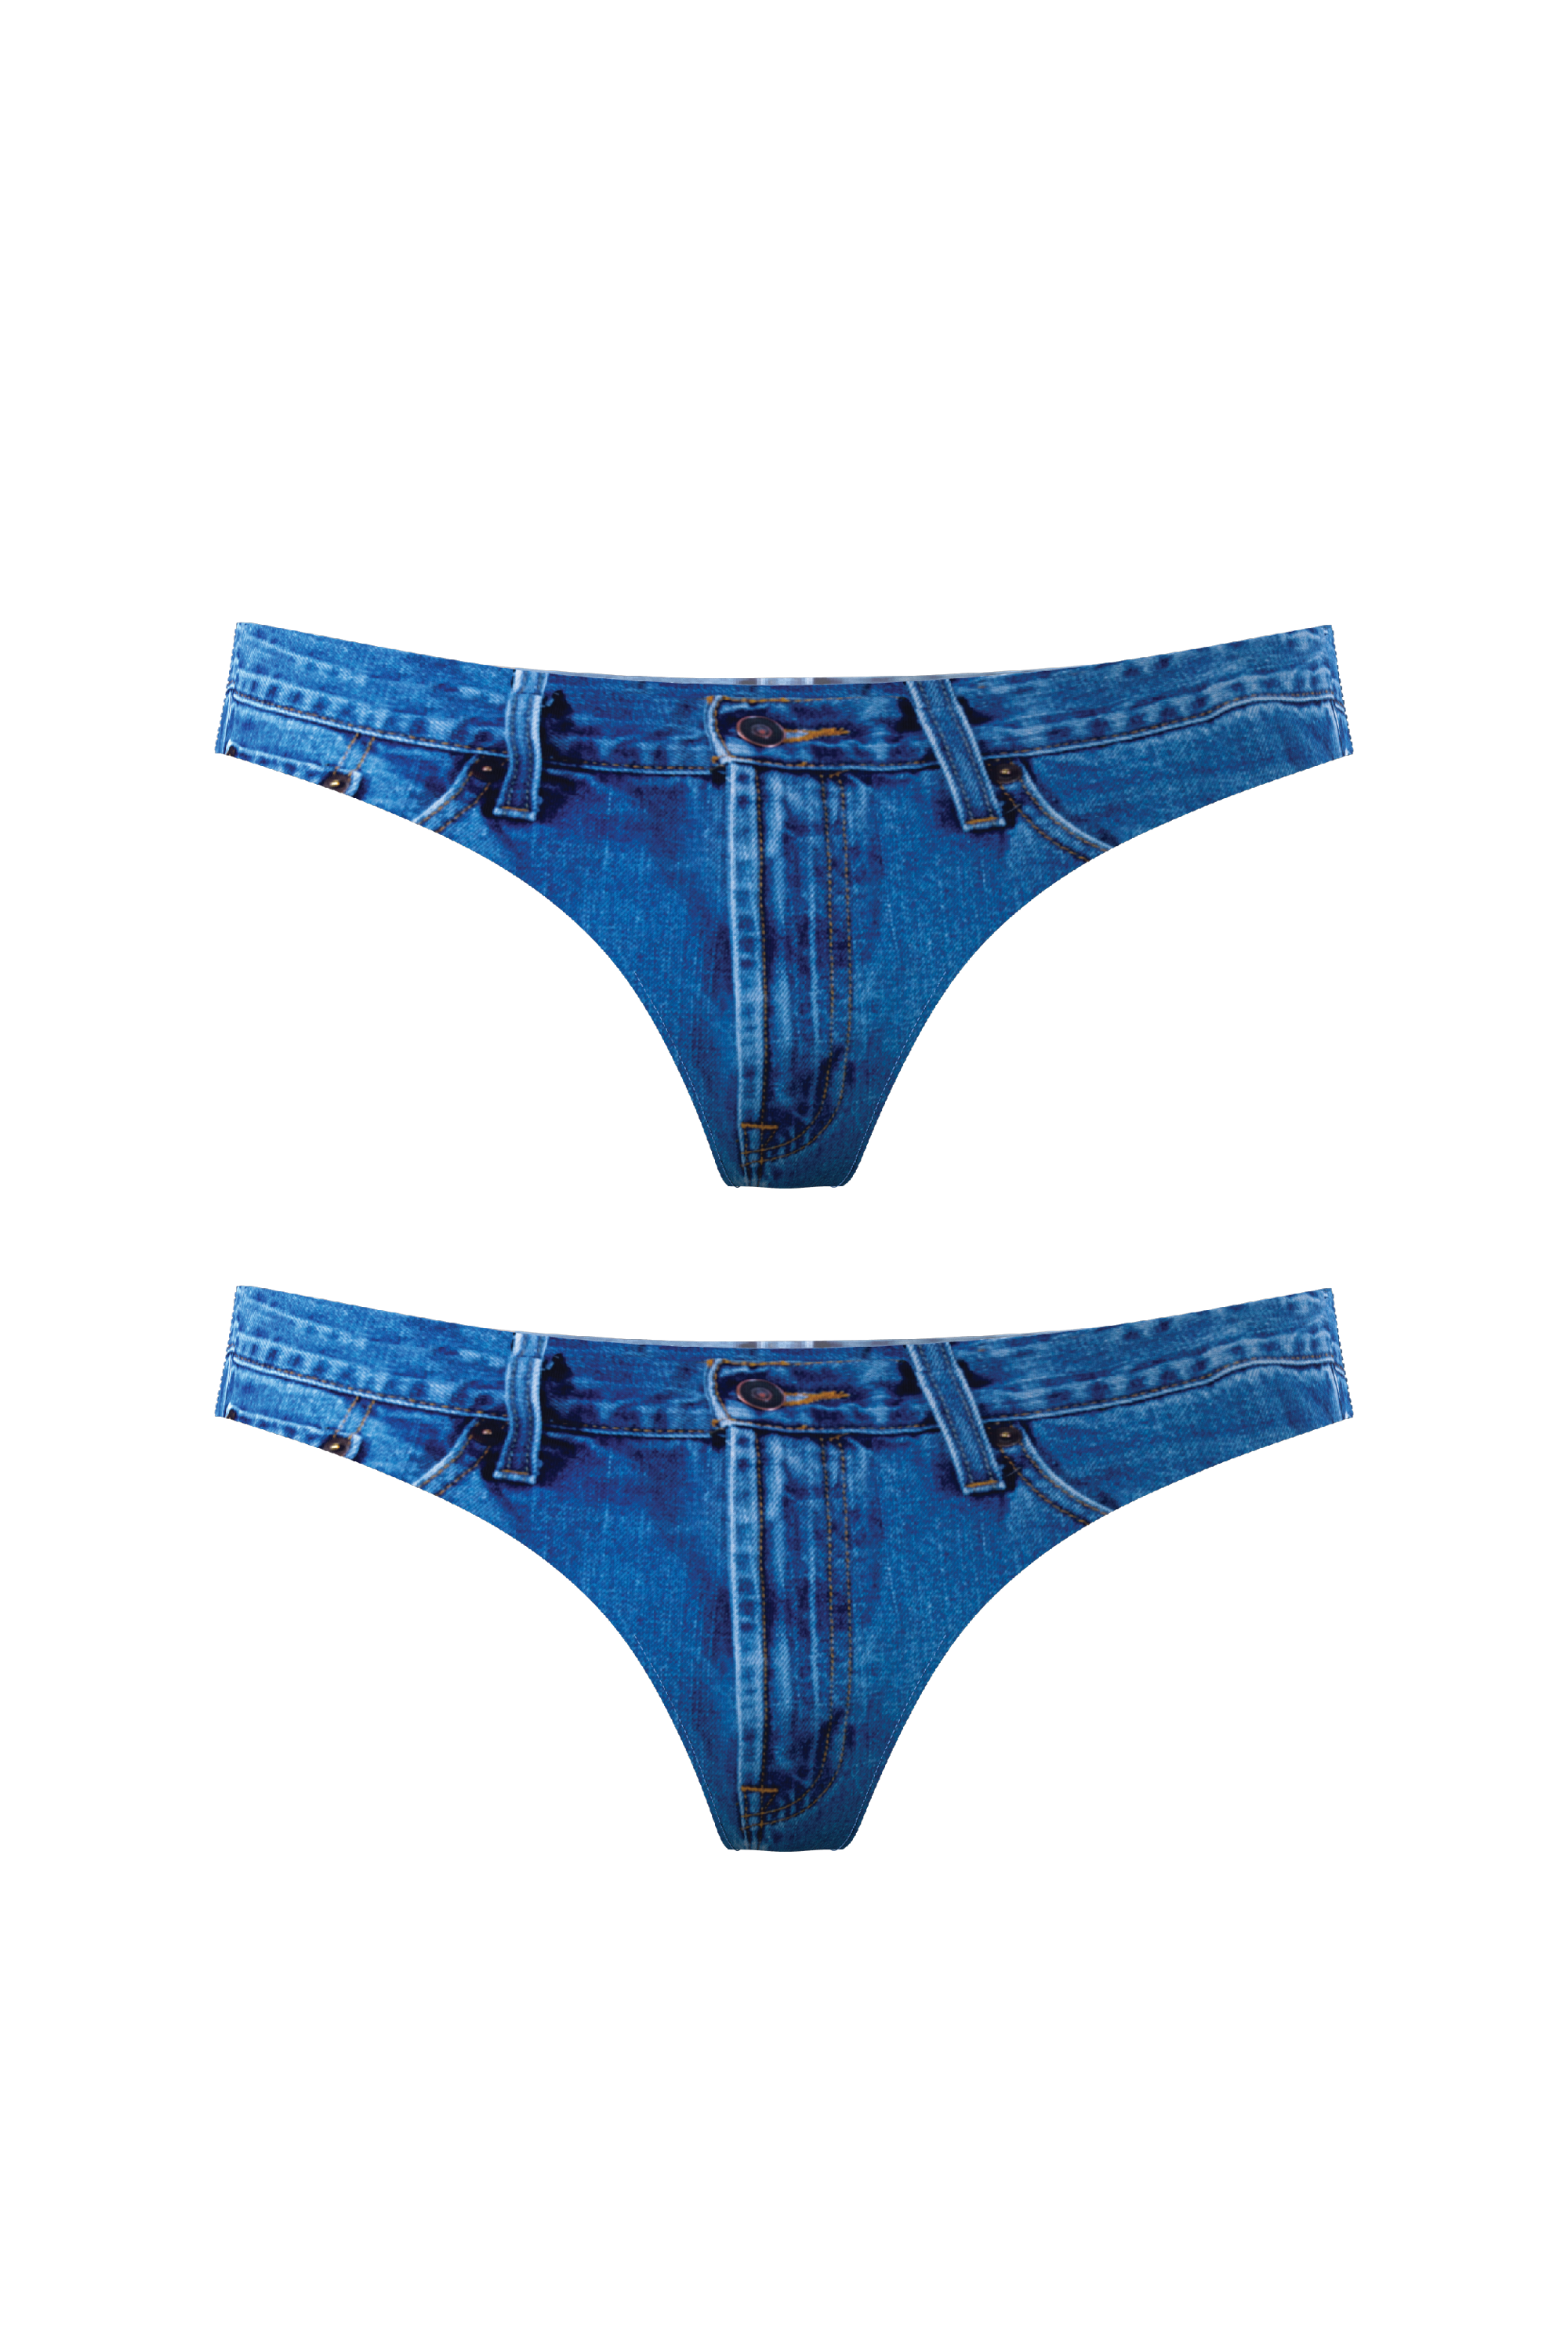 Buy GenericCouples Underwear Matching Set, His and Hers Underwear